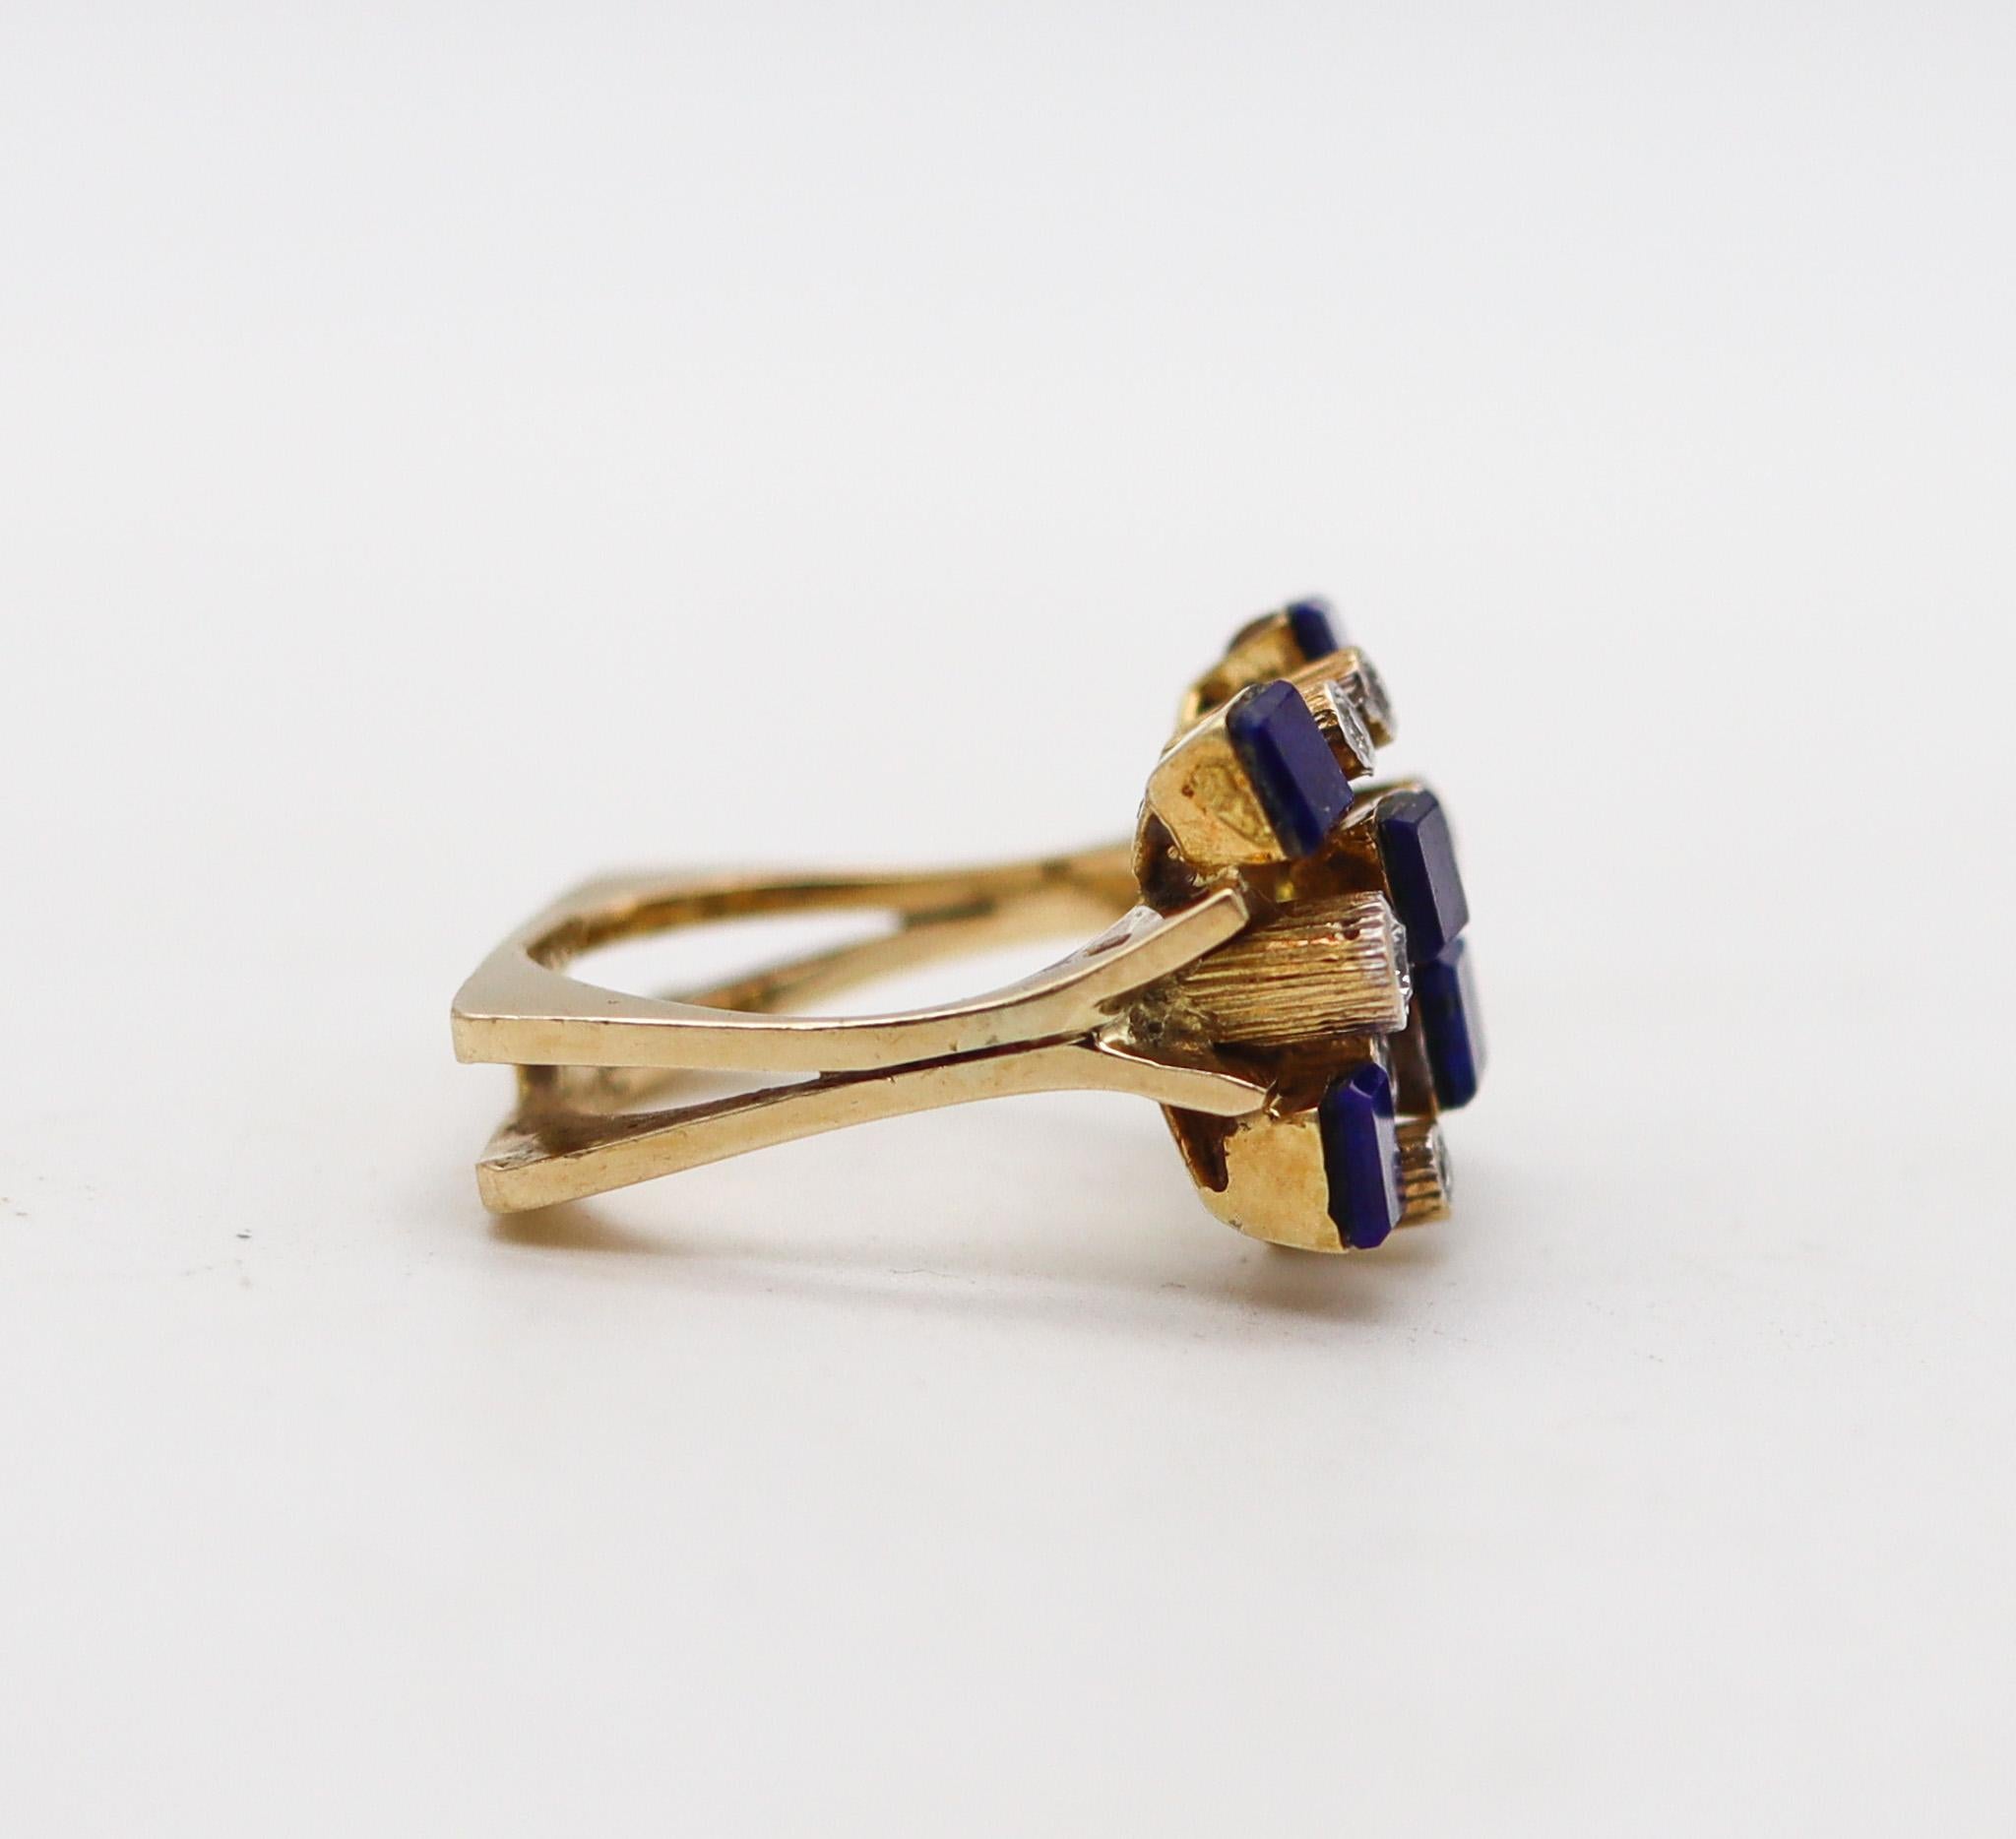 Modernist Danish 1970 Geometric Ring In 14Kt Yellow Gold With Diamonds And Lapis Lazuli